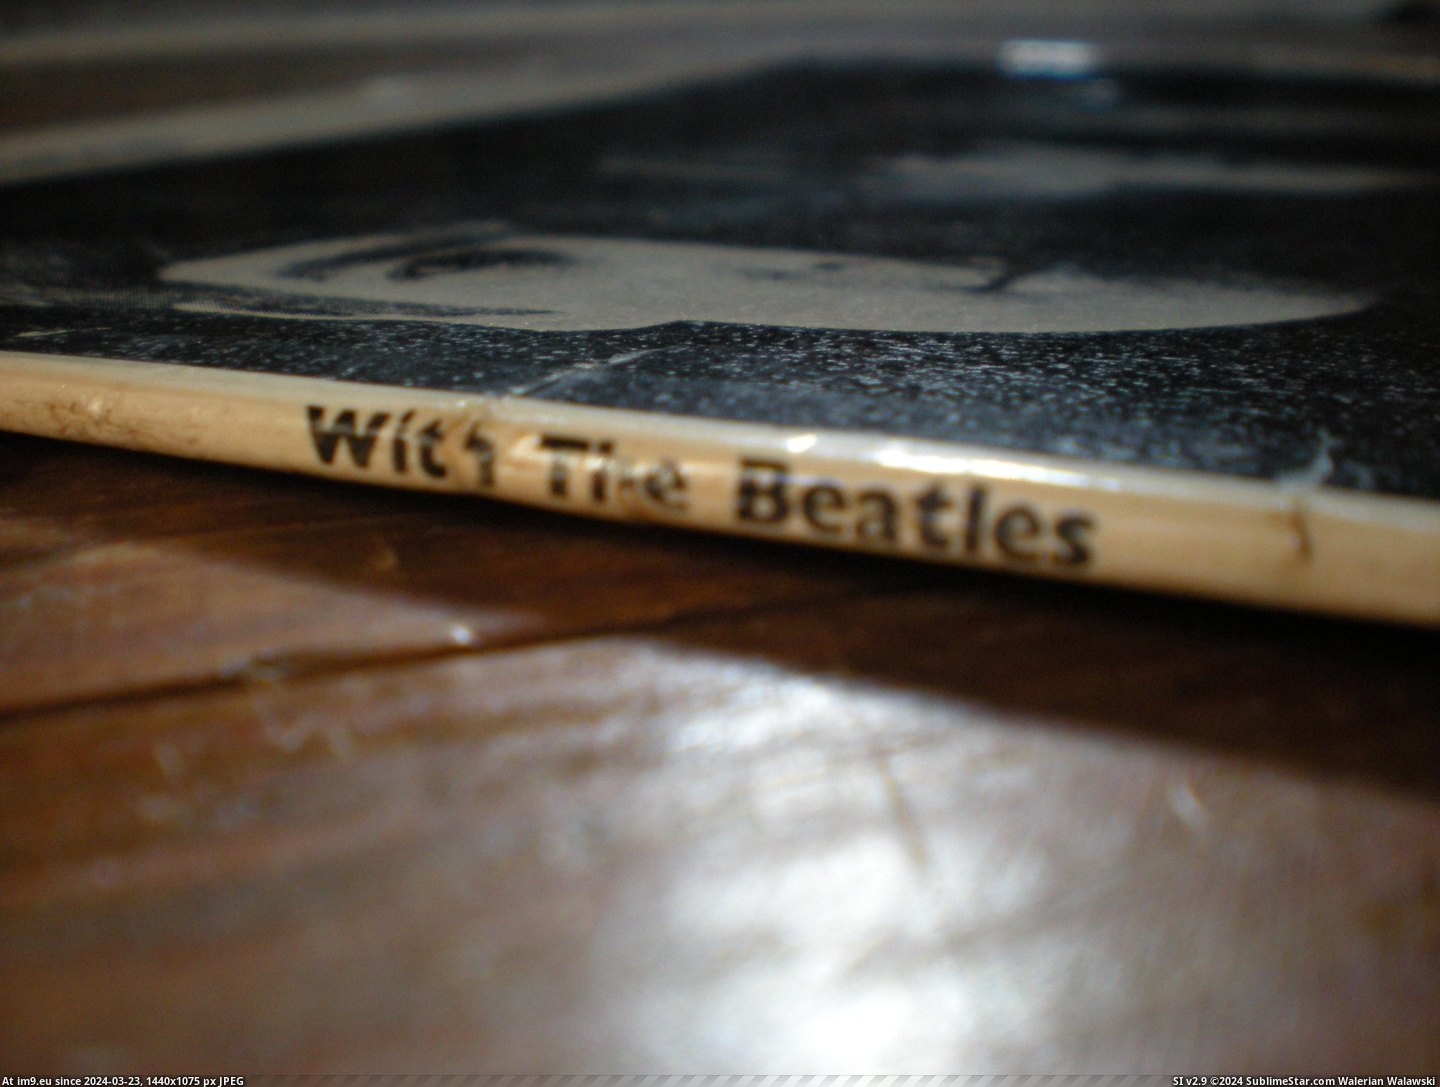  #Beatles  With The Beatles 7N 7 Pic. (Изображение из альбом new 1))